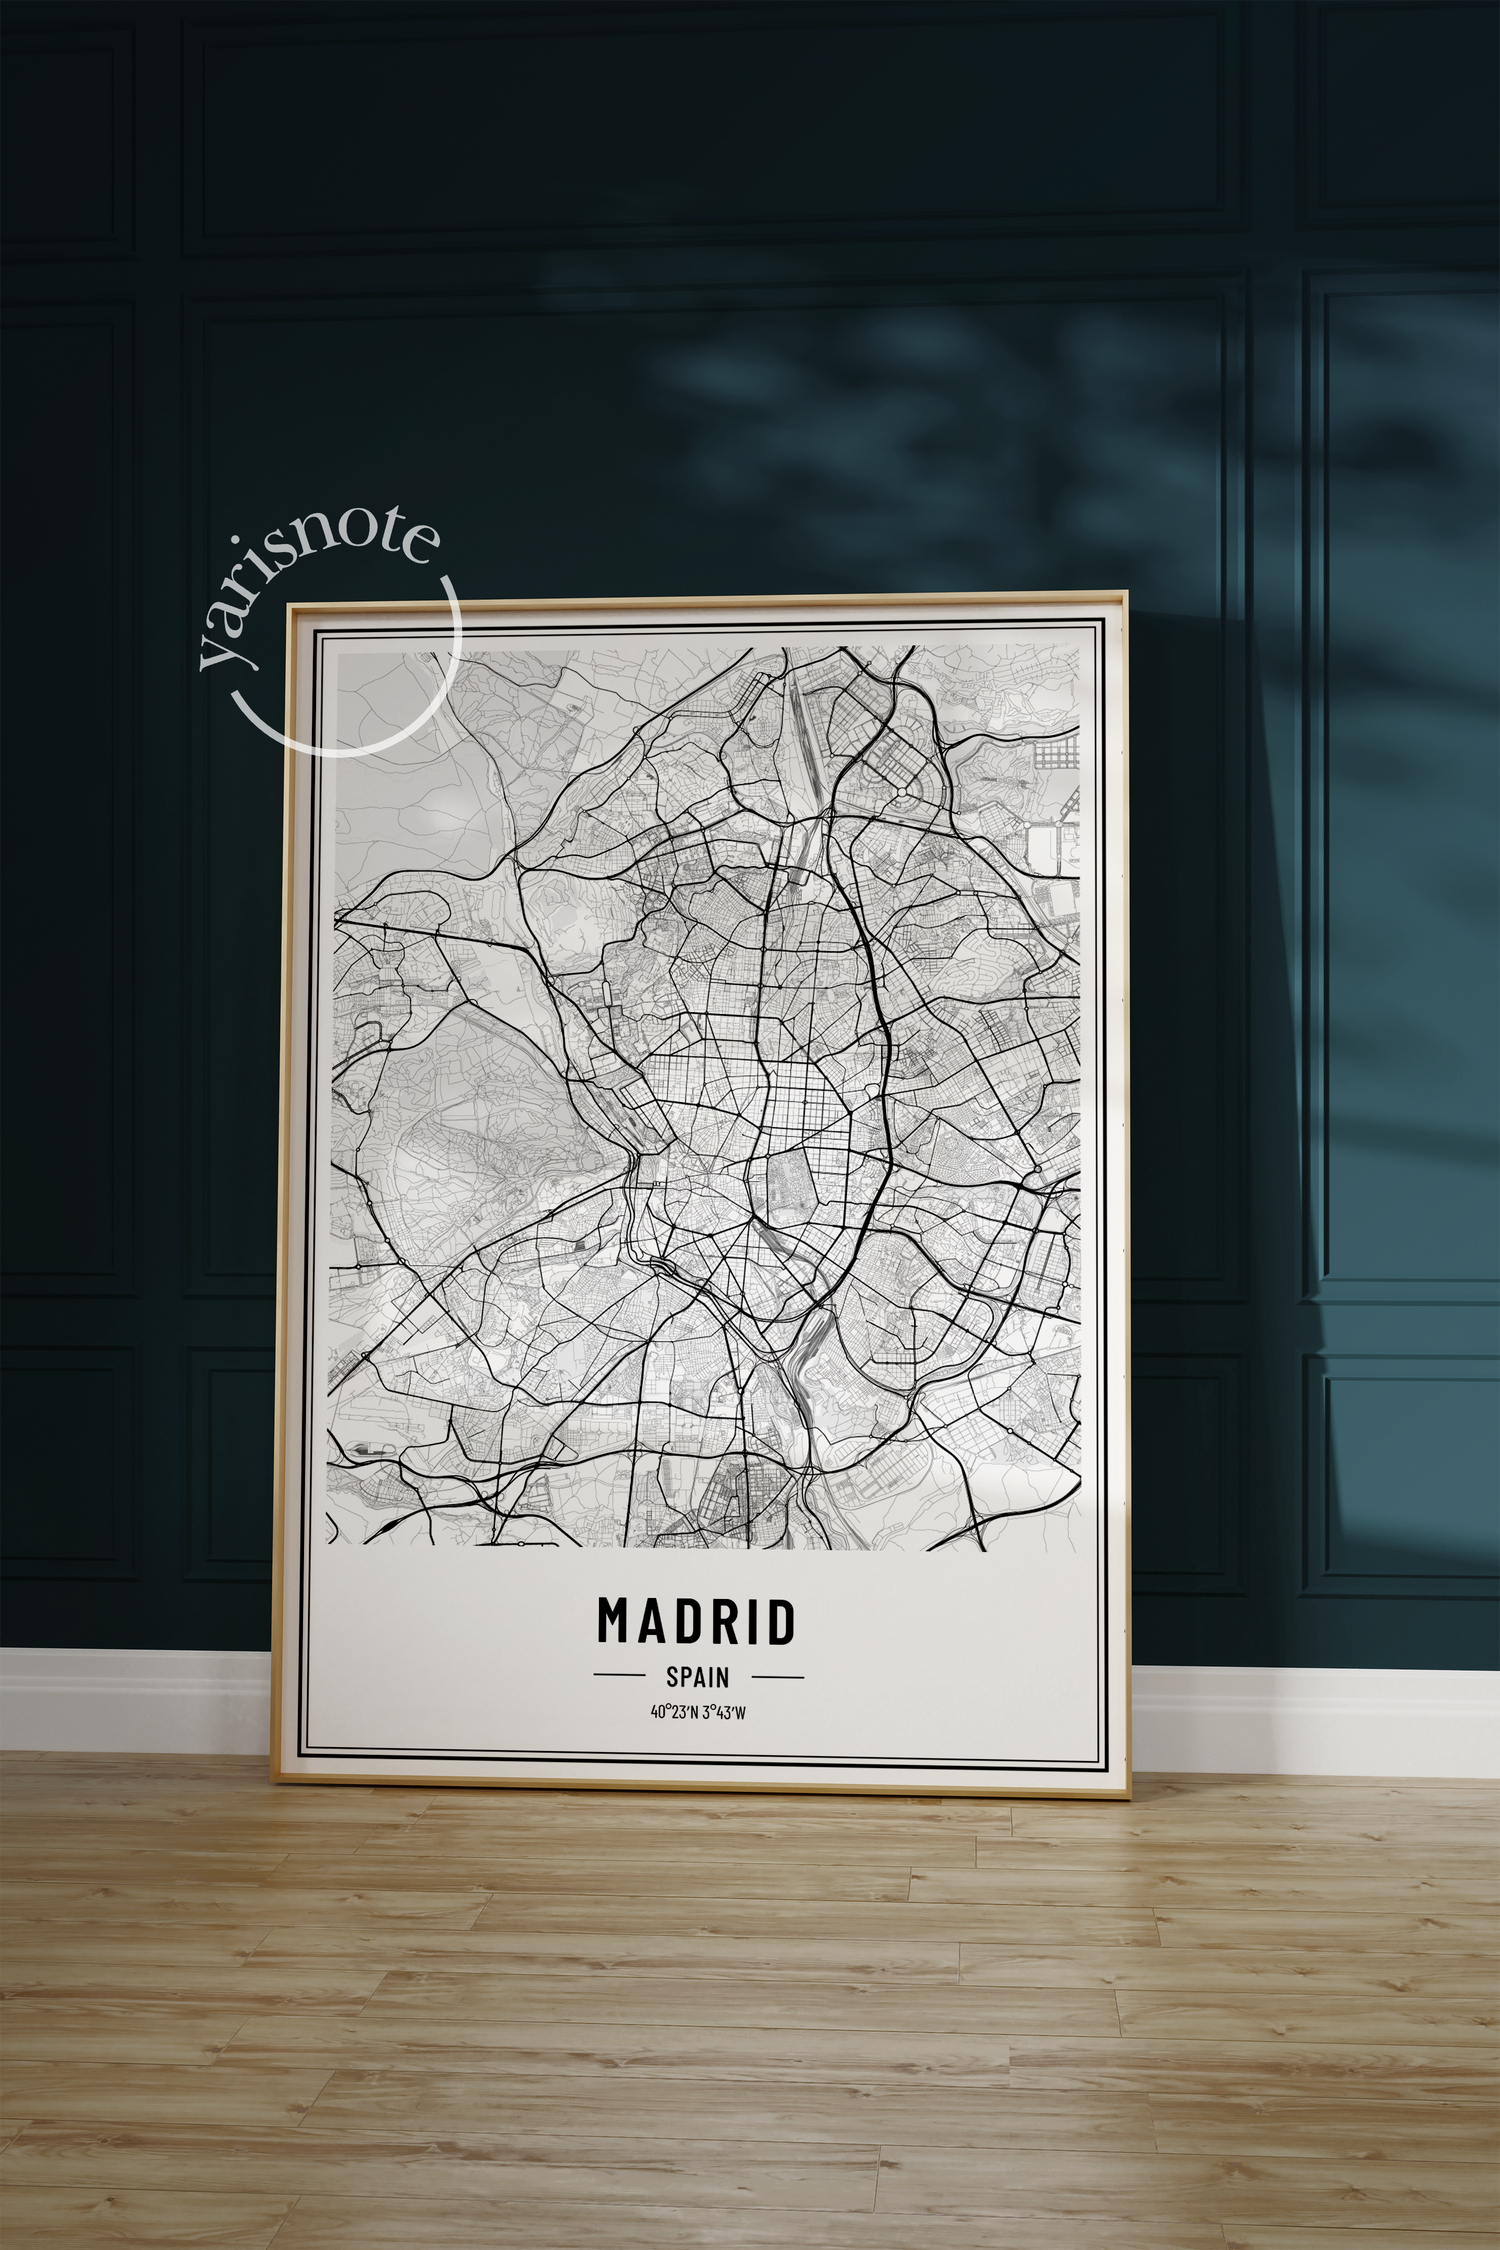 Madrid Map Unframed Poster